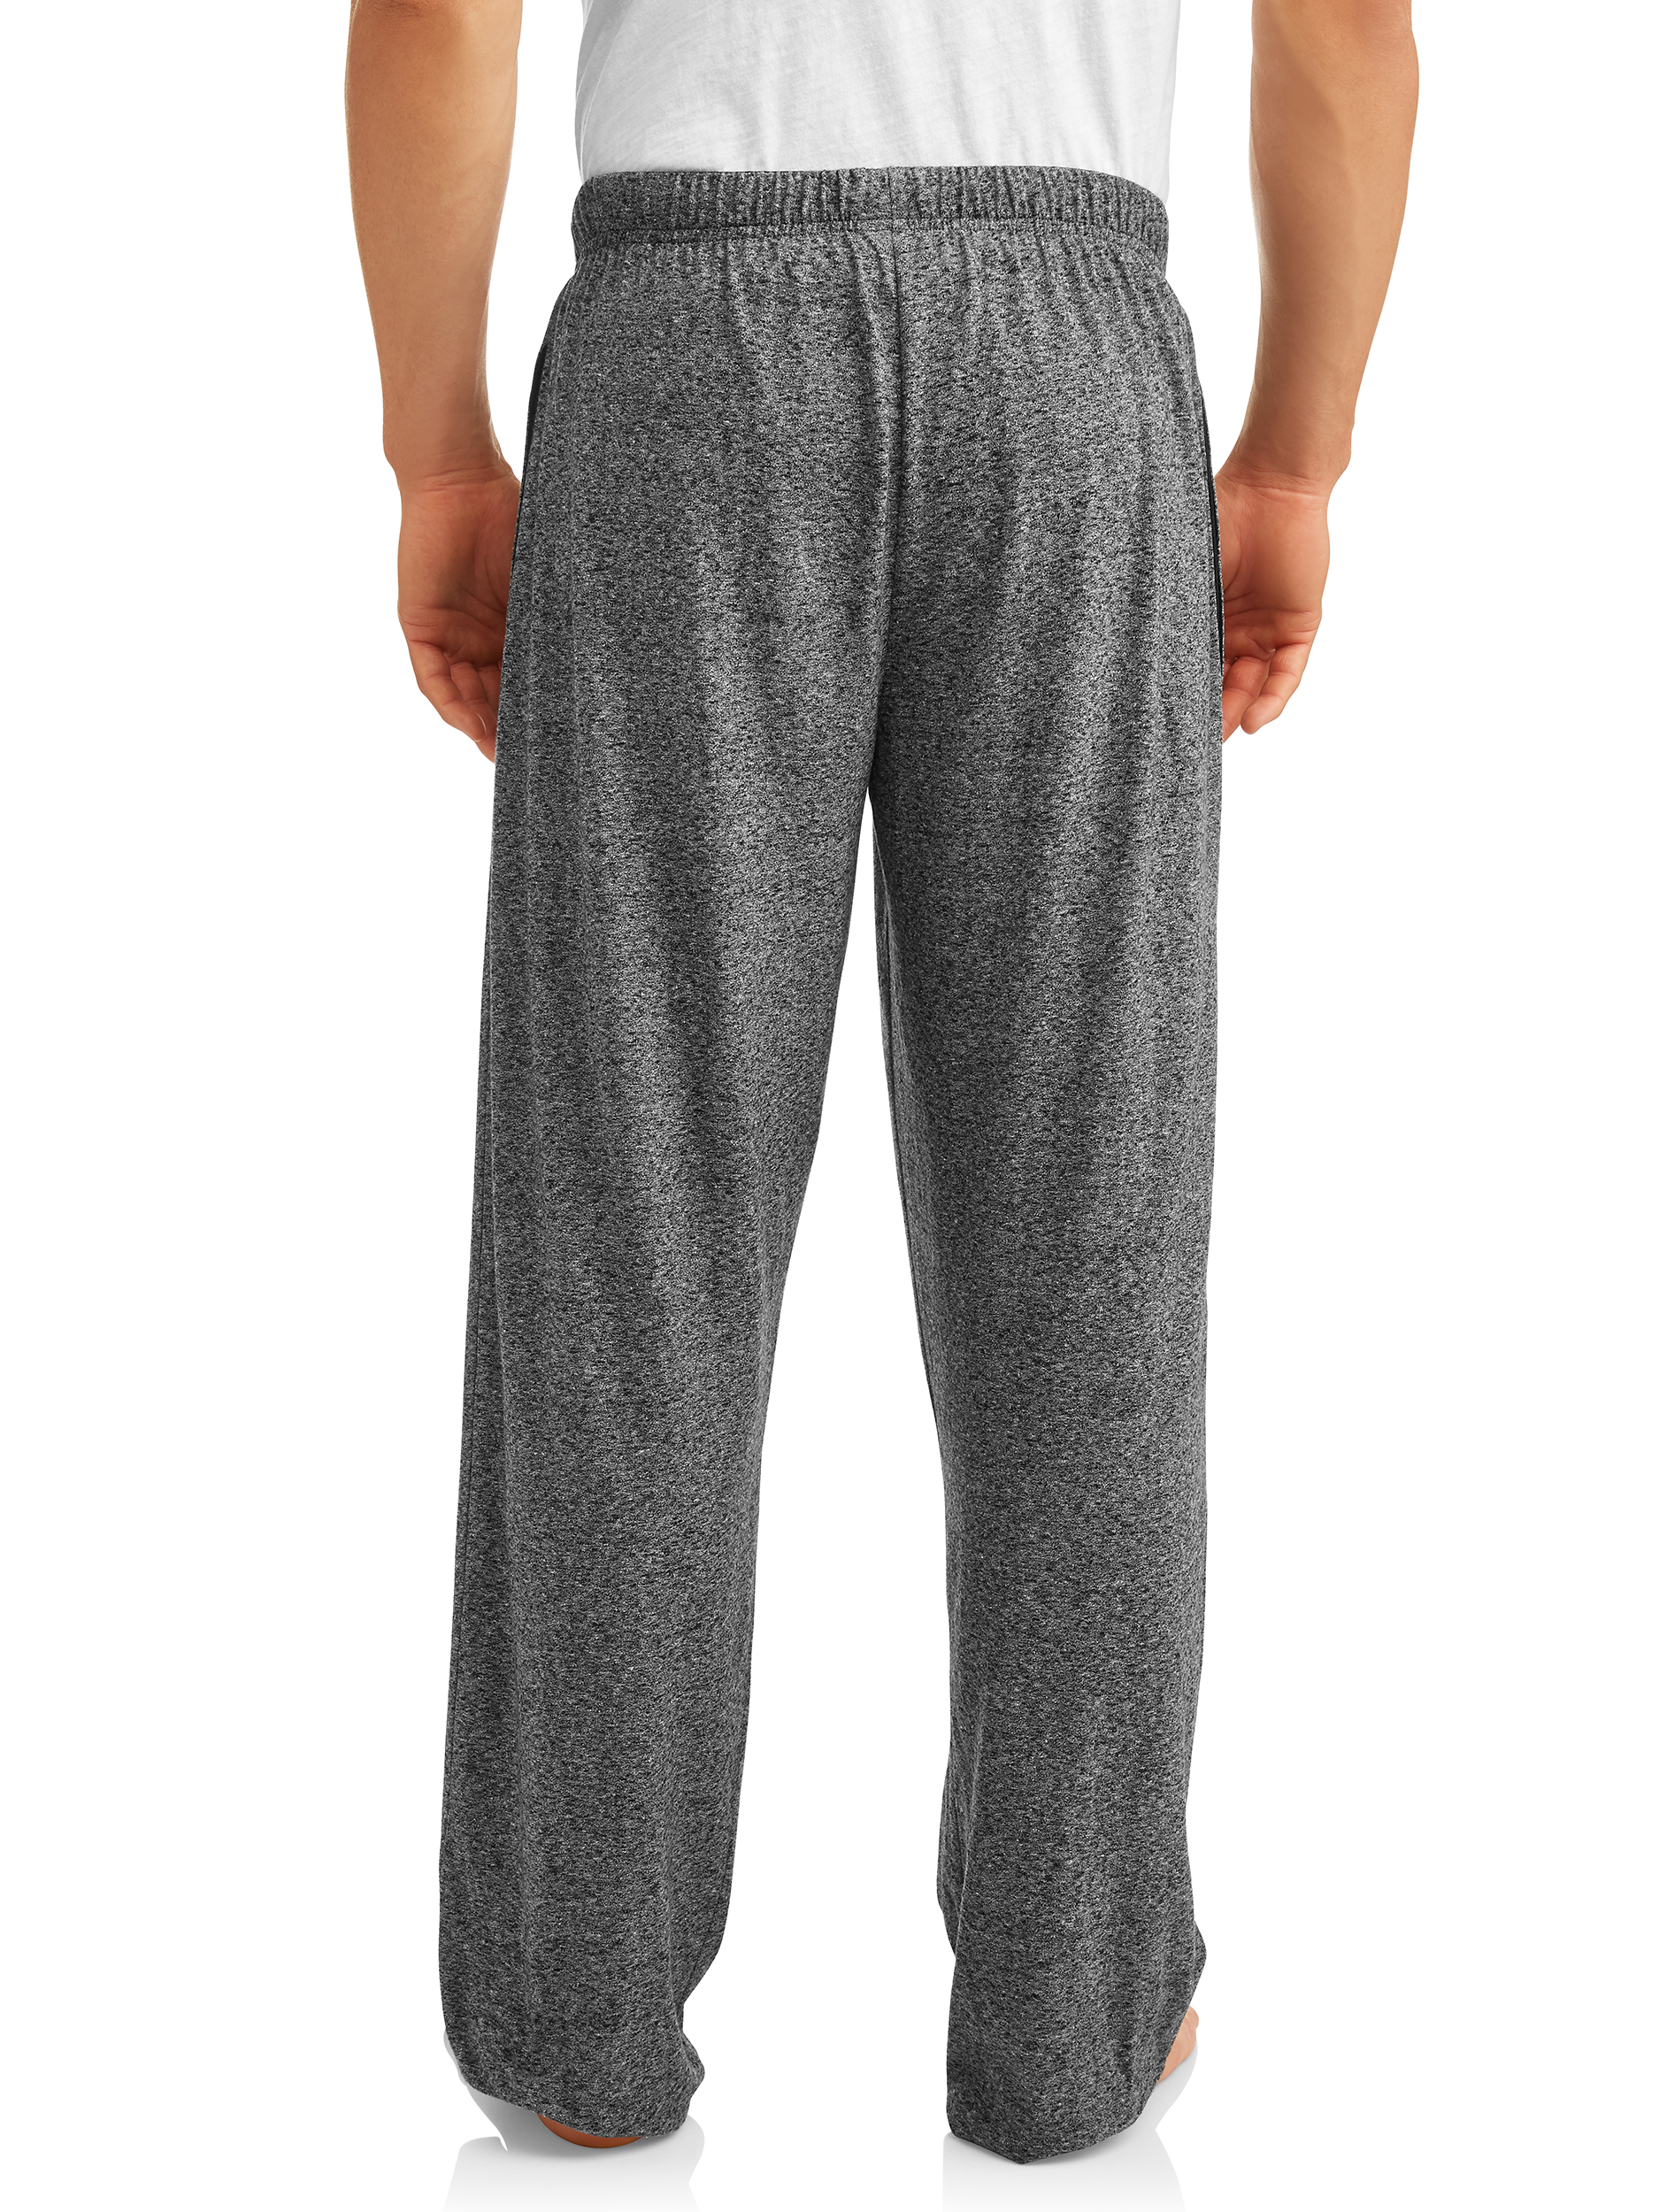 Hanes Men's and Big Men's X-Temp Solid Knit Pajama Pant - image 3 of 3